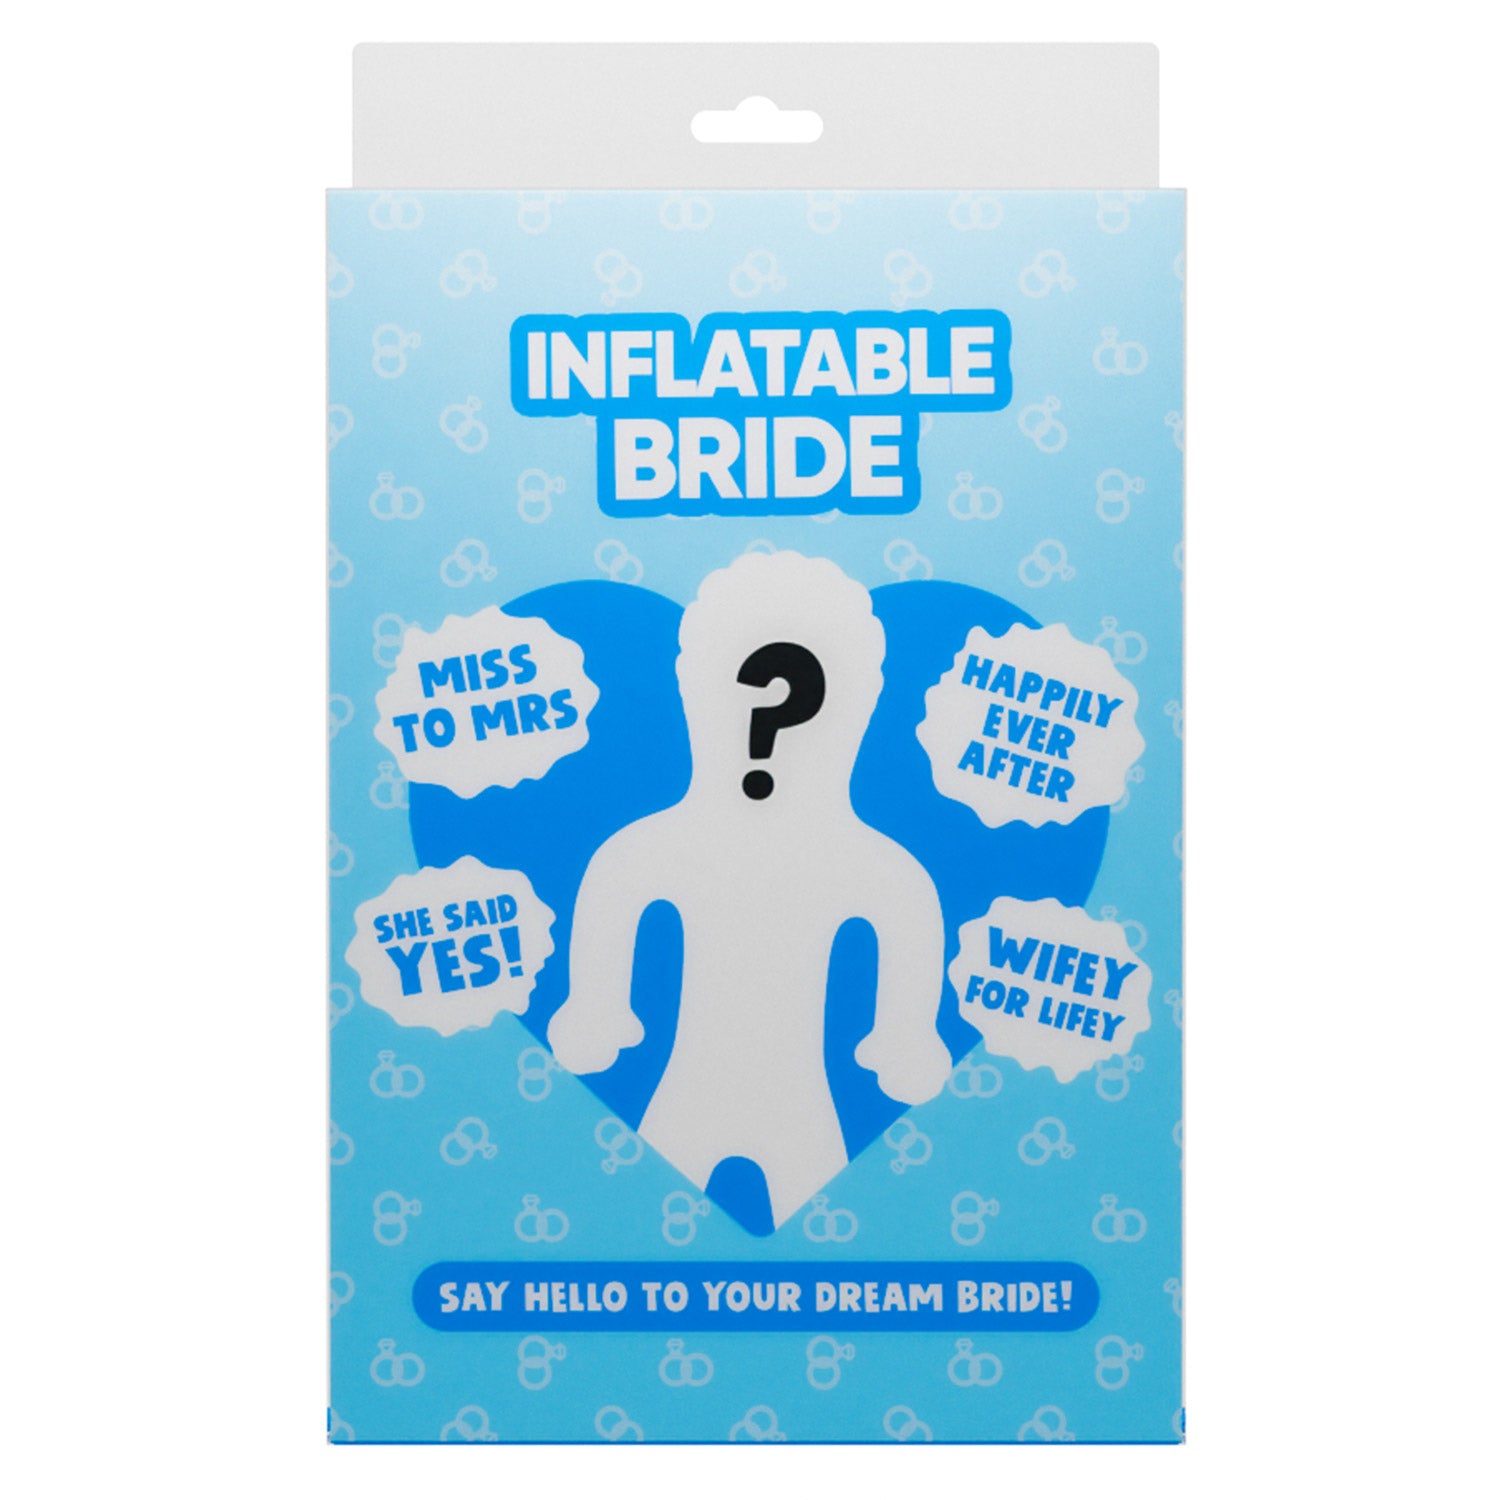 Inflatable Bride Box